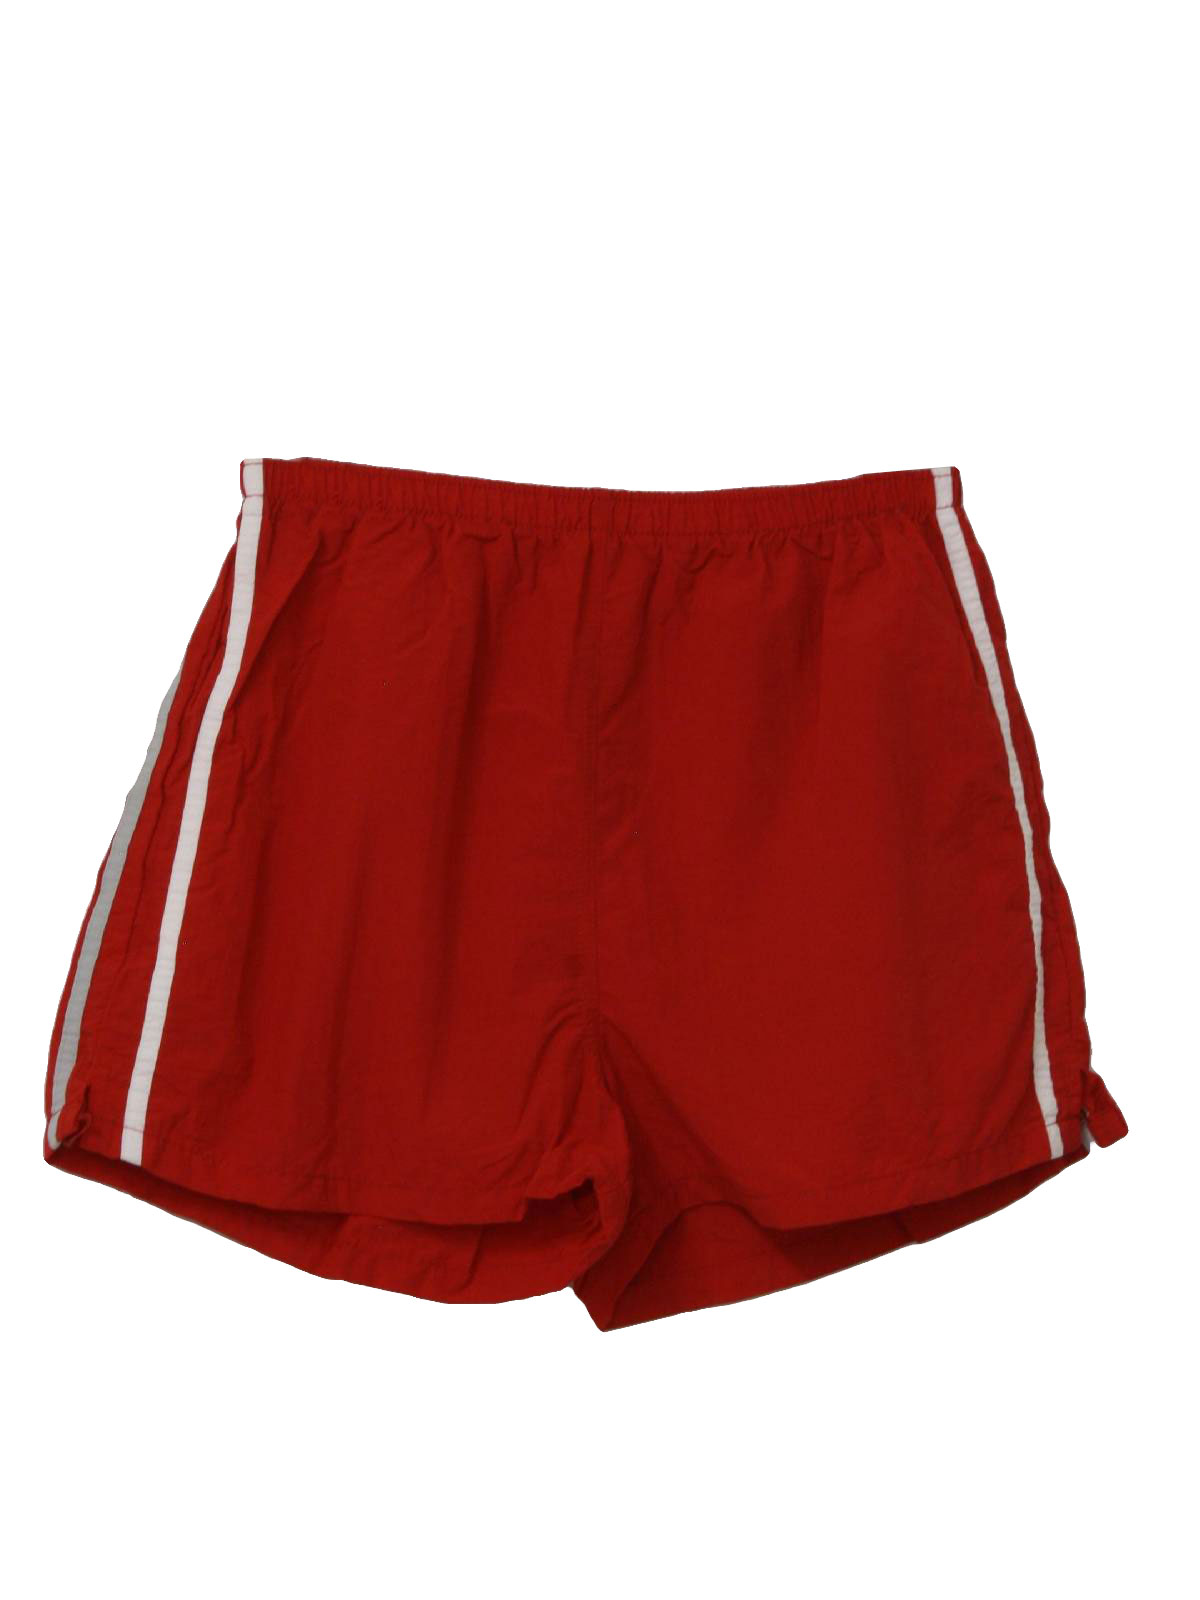 1990's Retro Shorts: 90s -Missing Label- Mens red background nylon ...